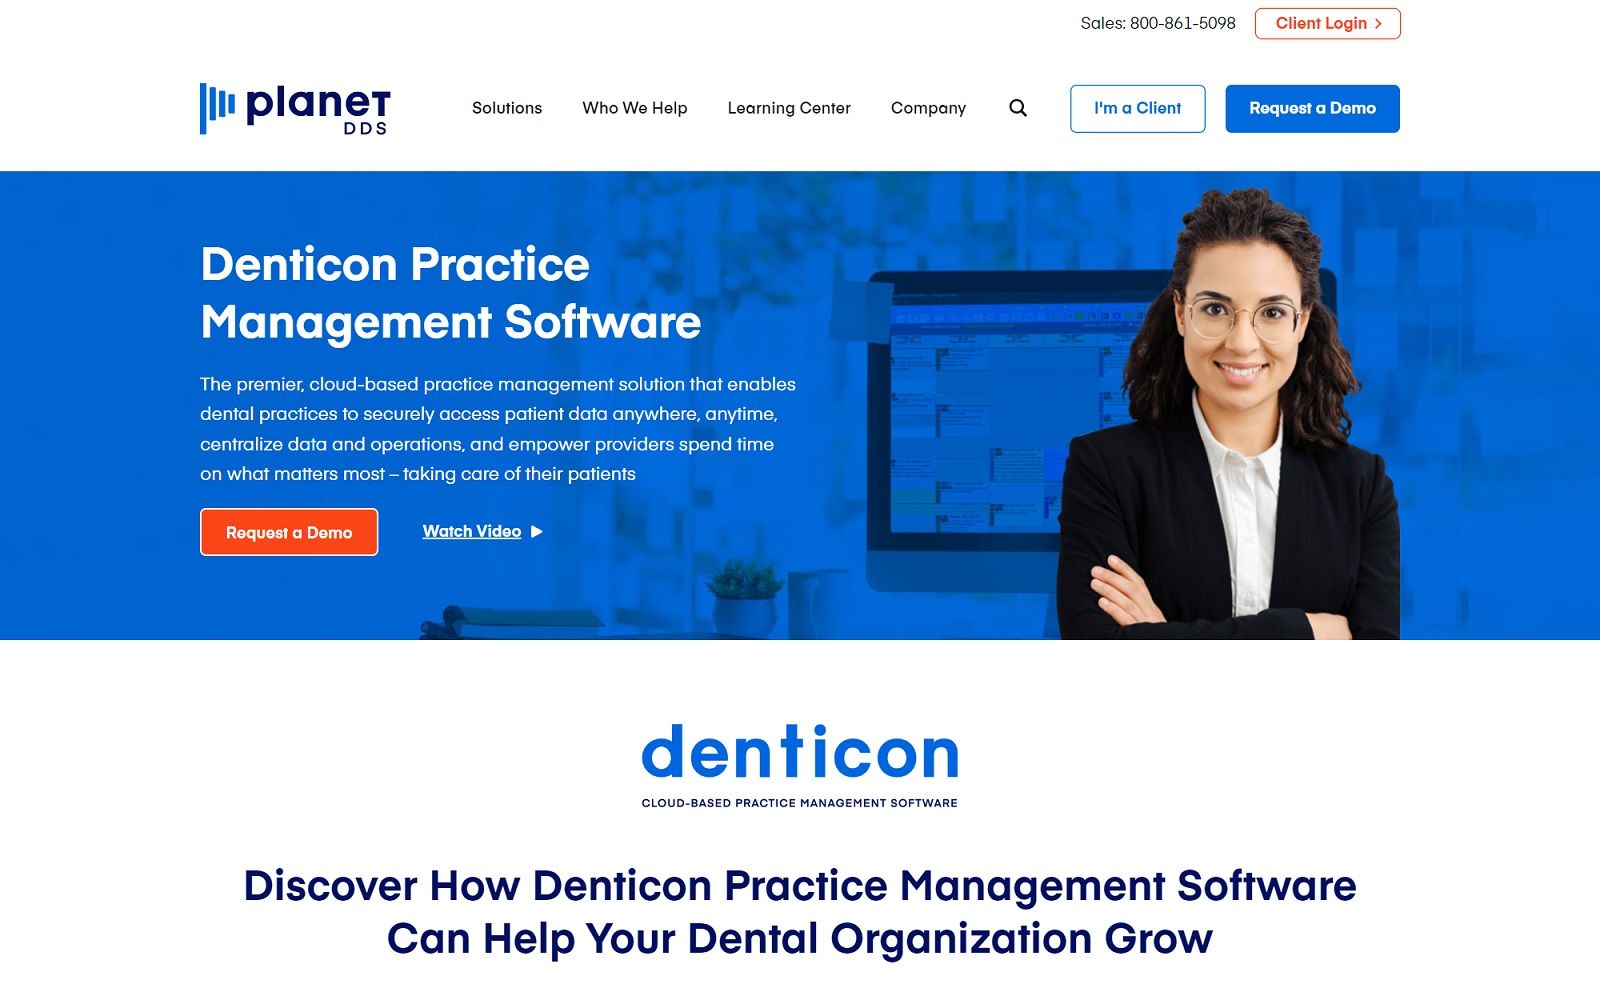 The Screenshot Of Denticon Website